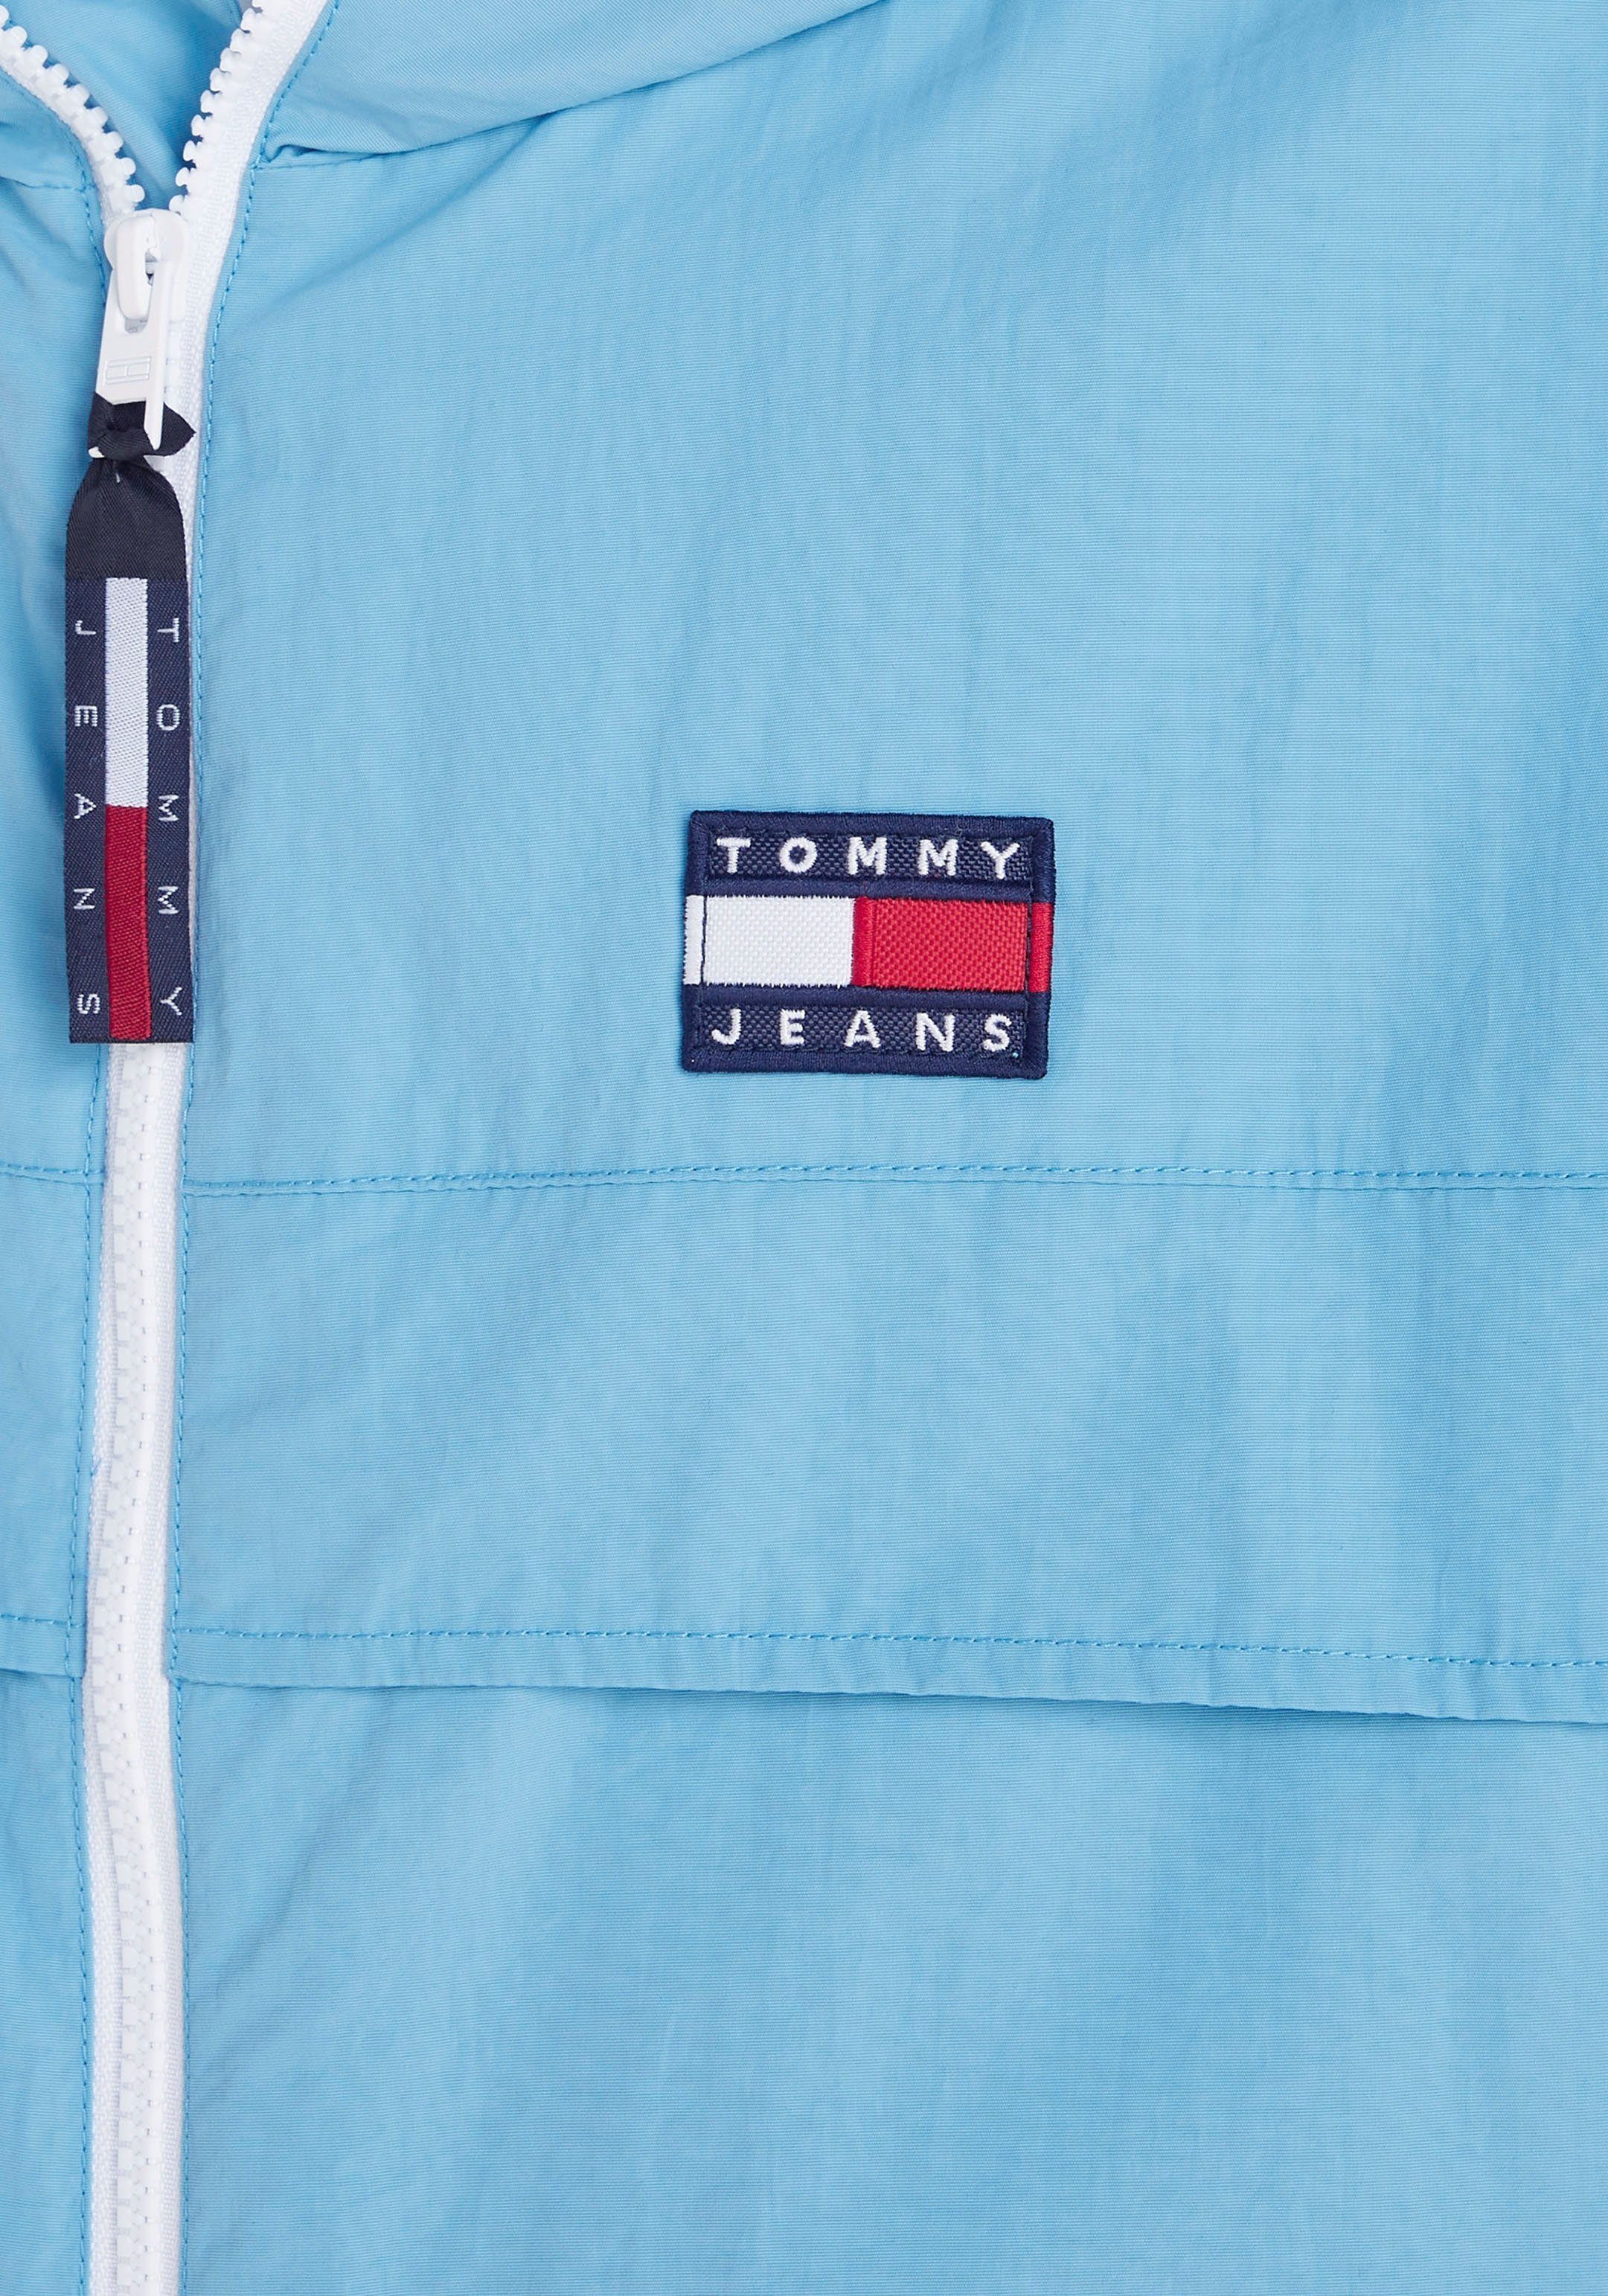 Tommy Jeans CHICAGO Skysail Kapuze WINDBREAKER mit Windbreaker TJM